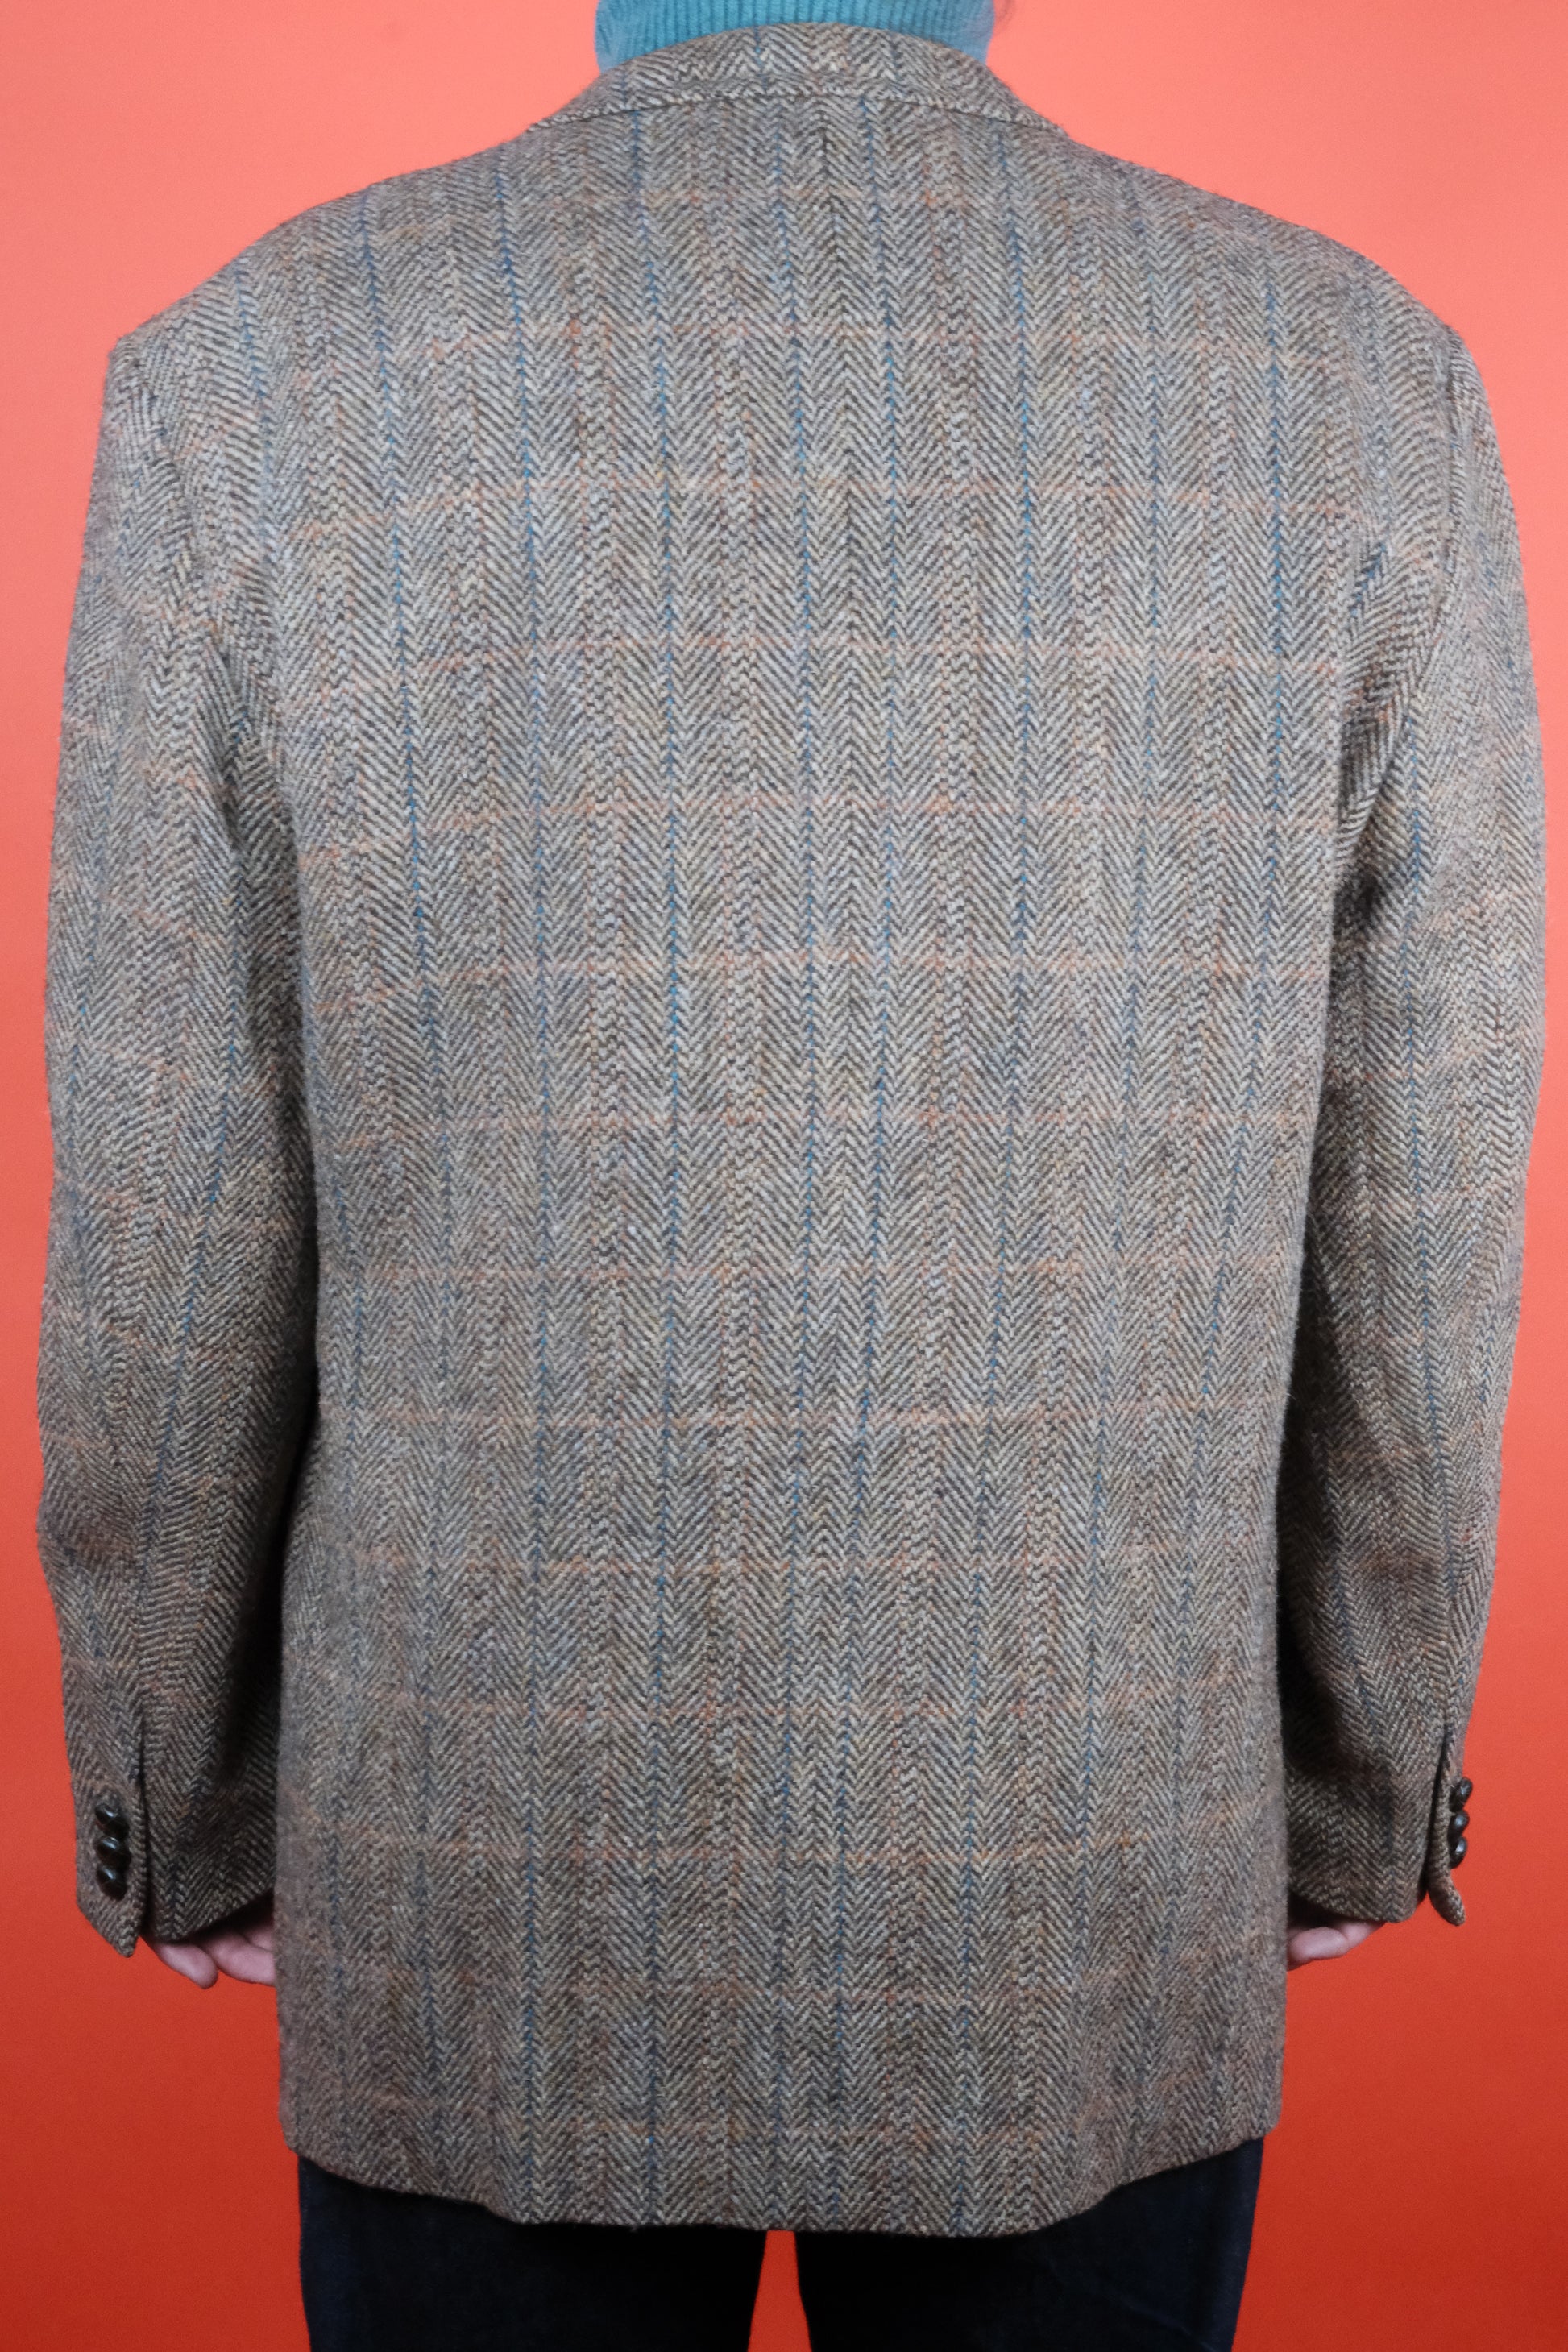 Konen Harrris Tweed Suit Jacket 'XL' - vintage clothing clochard92.com